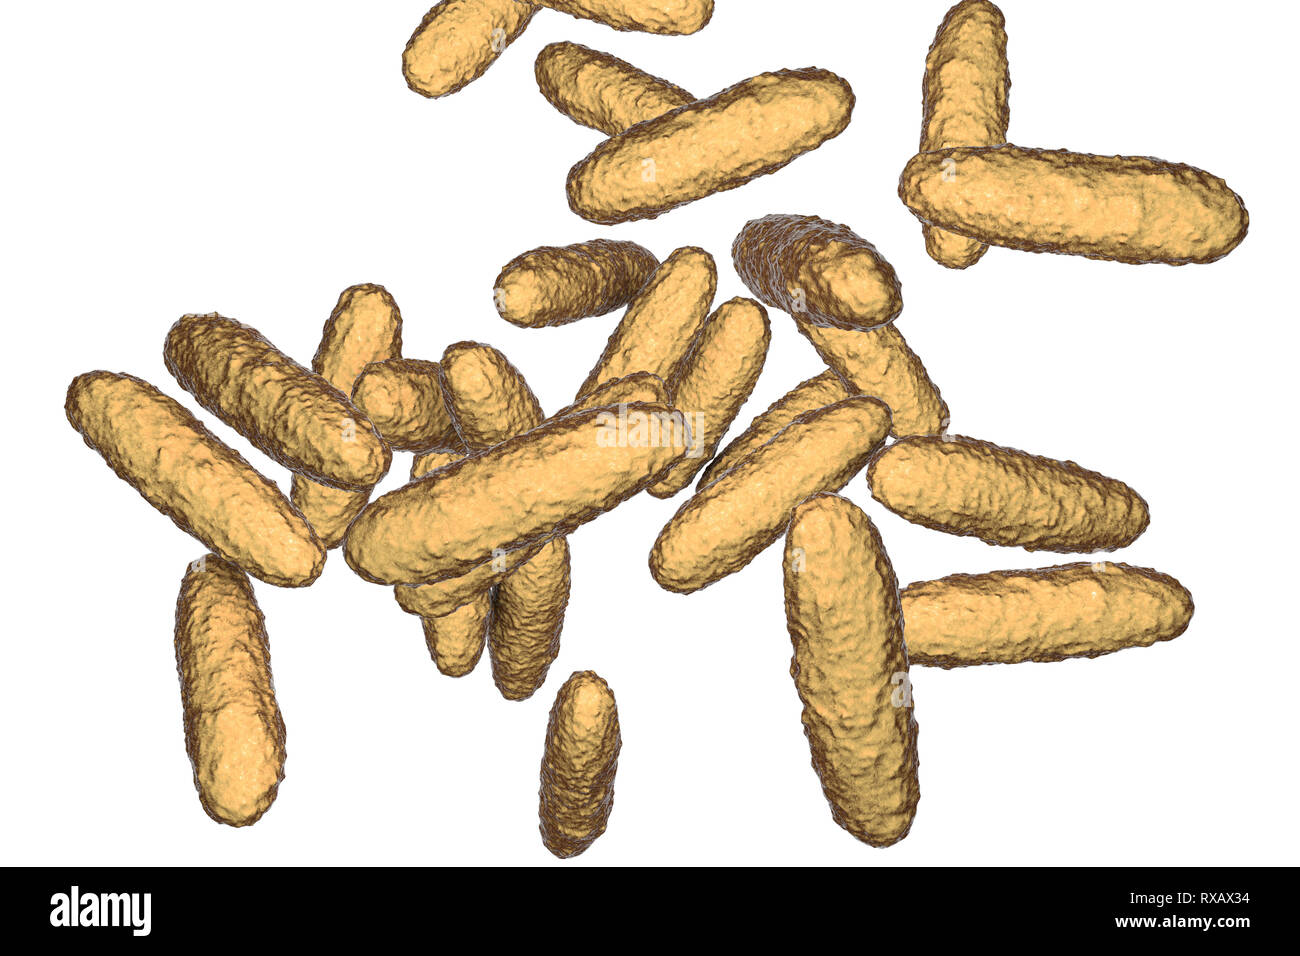 Bacteria of donovanosis infection, illustration Stock Photo